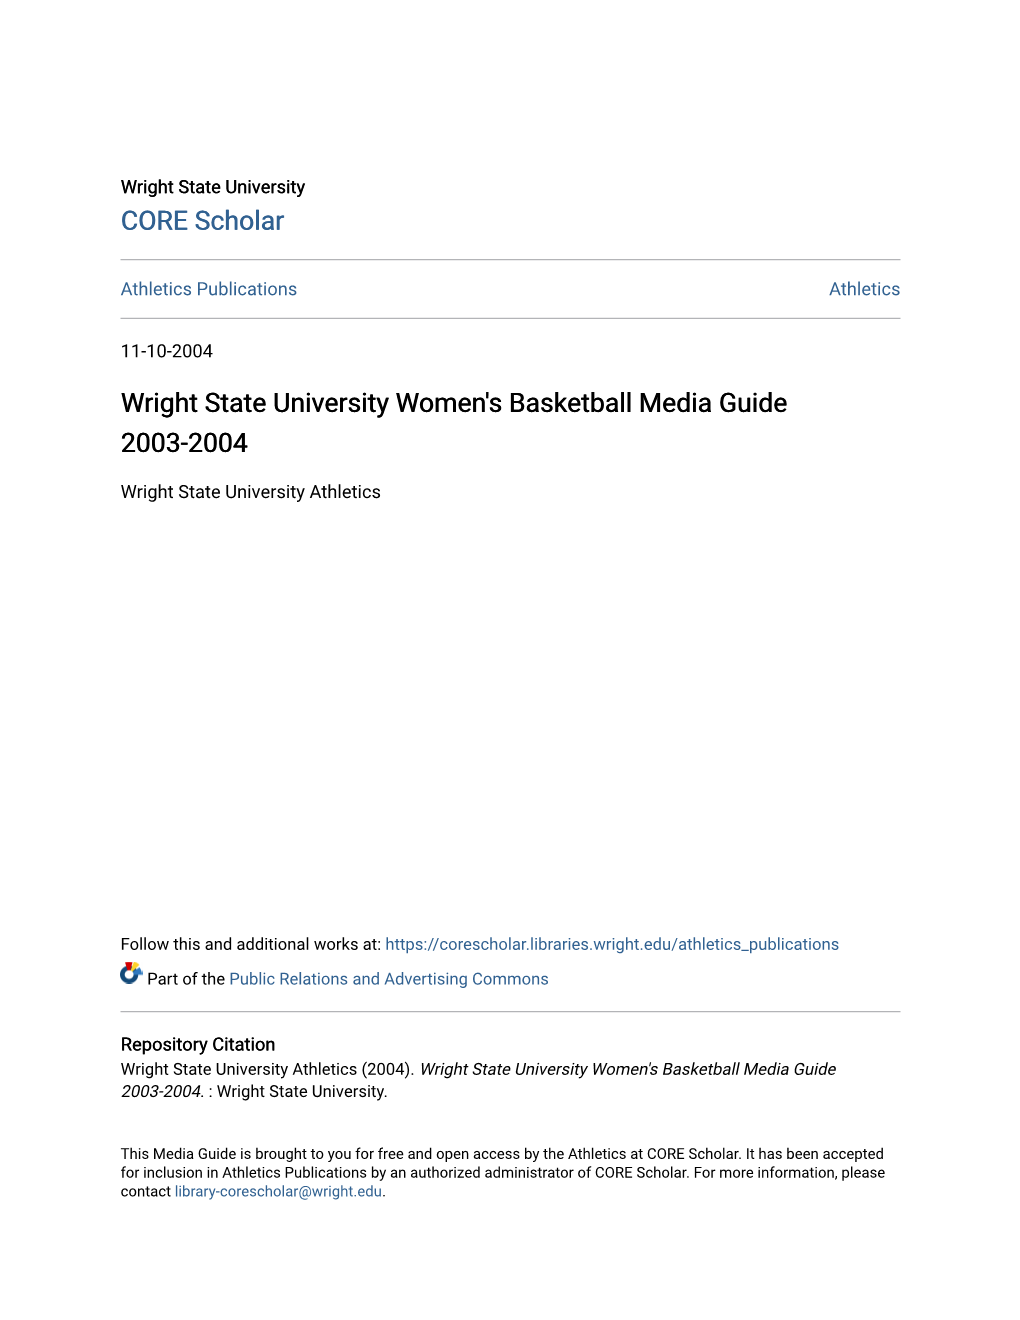 Wright State University Women's Basketball Media Guide 2003-2004